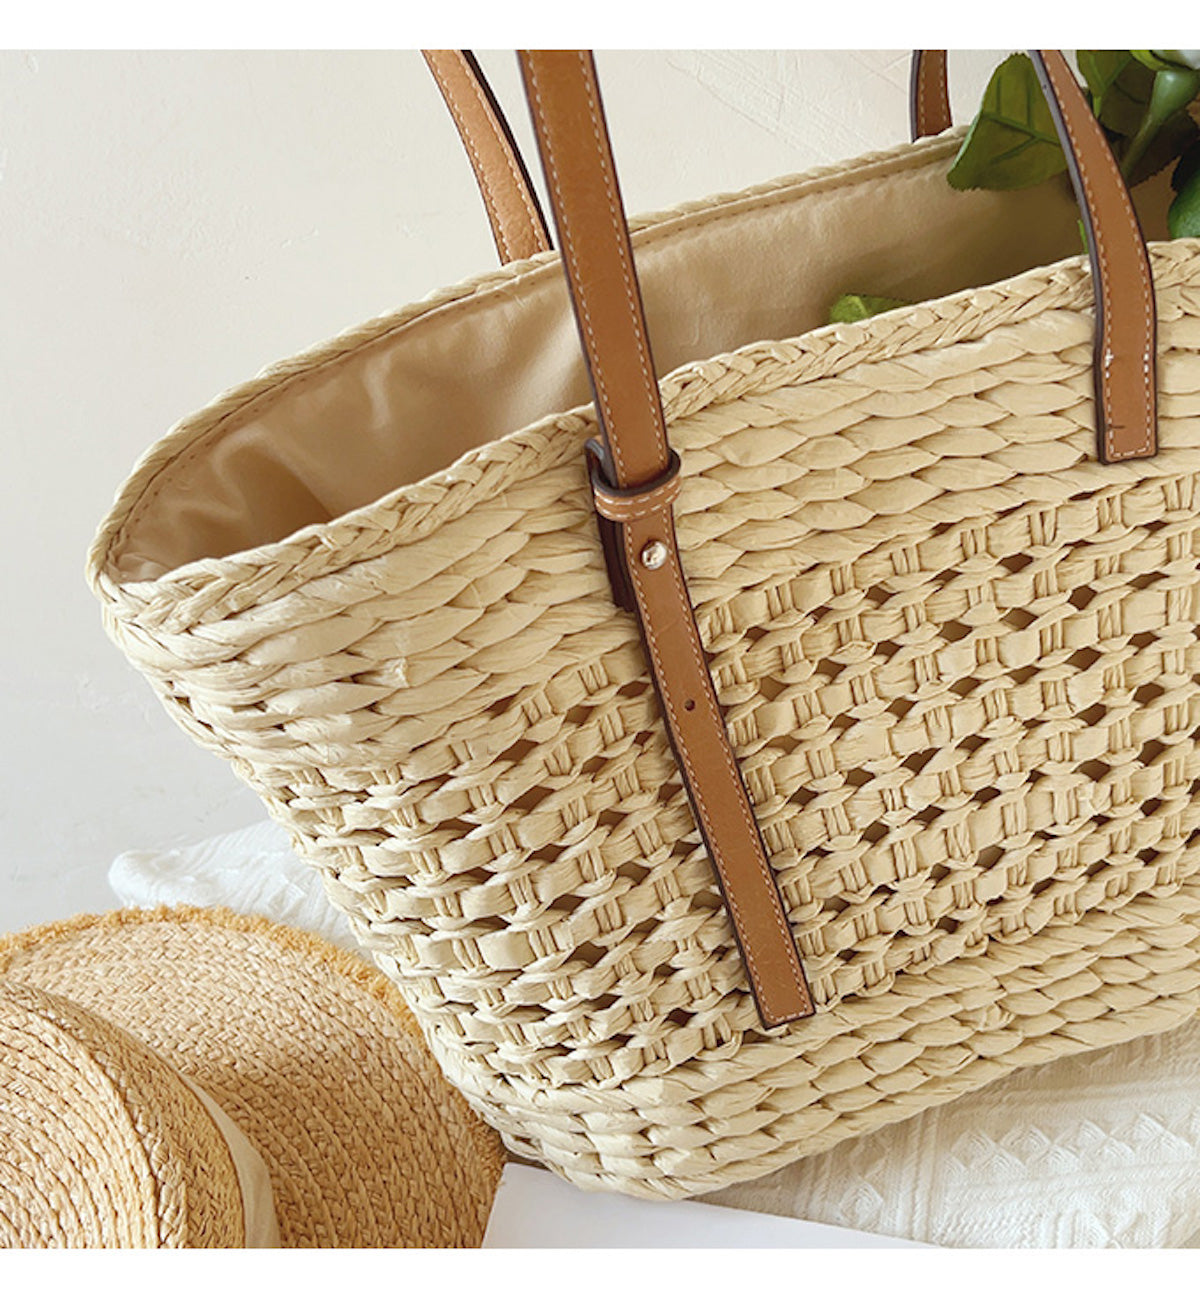 Straw Bag Handbag Beach Style Woven Market Bags Summer Color For